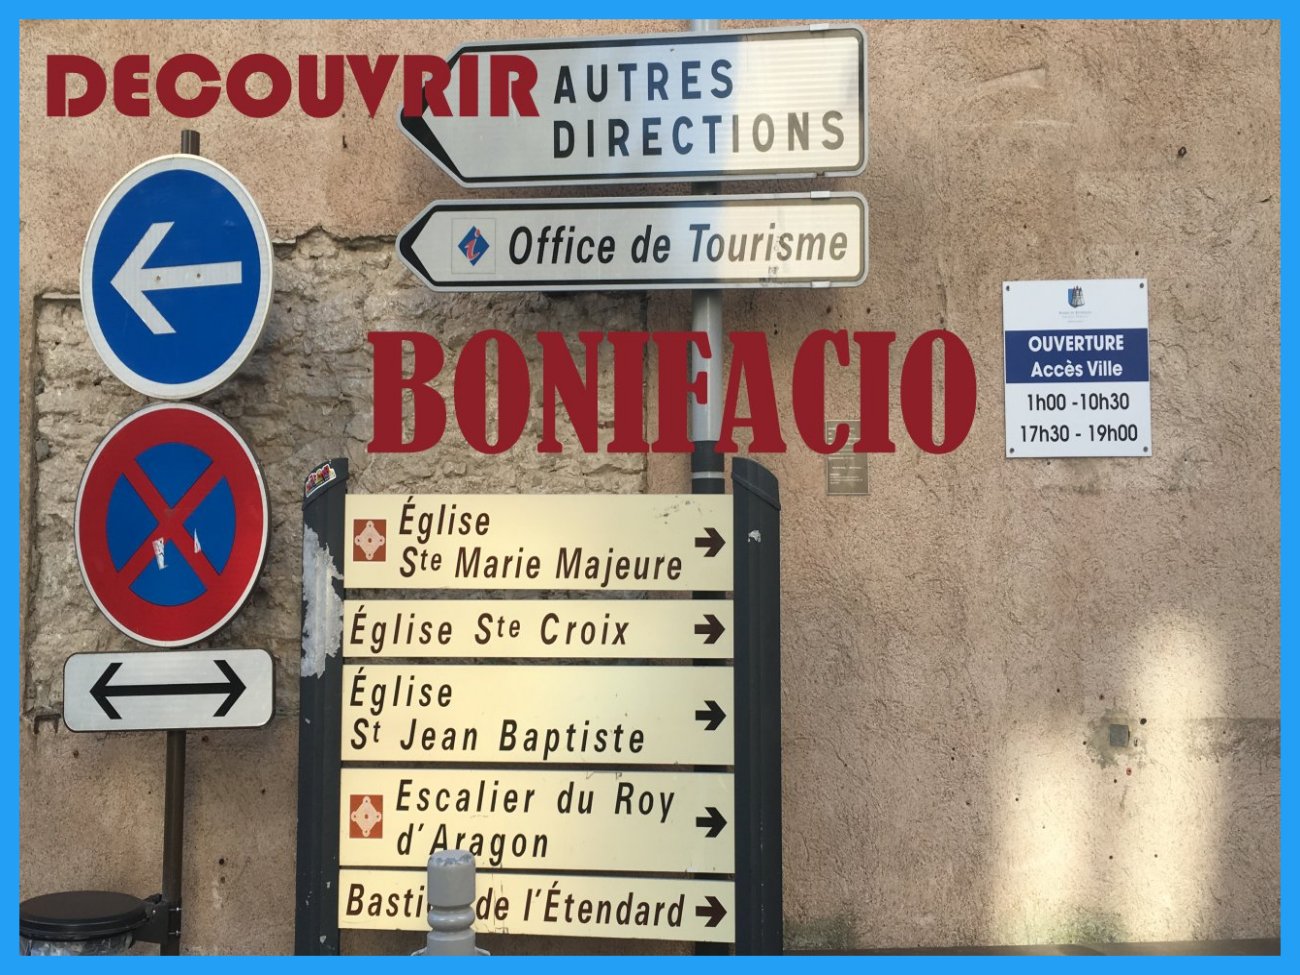 Bonifacio directions